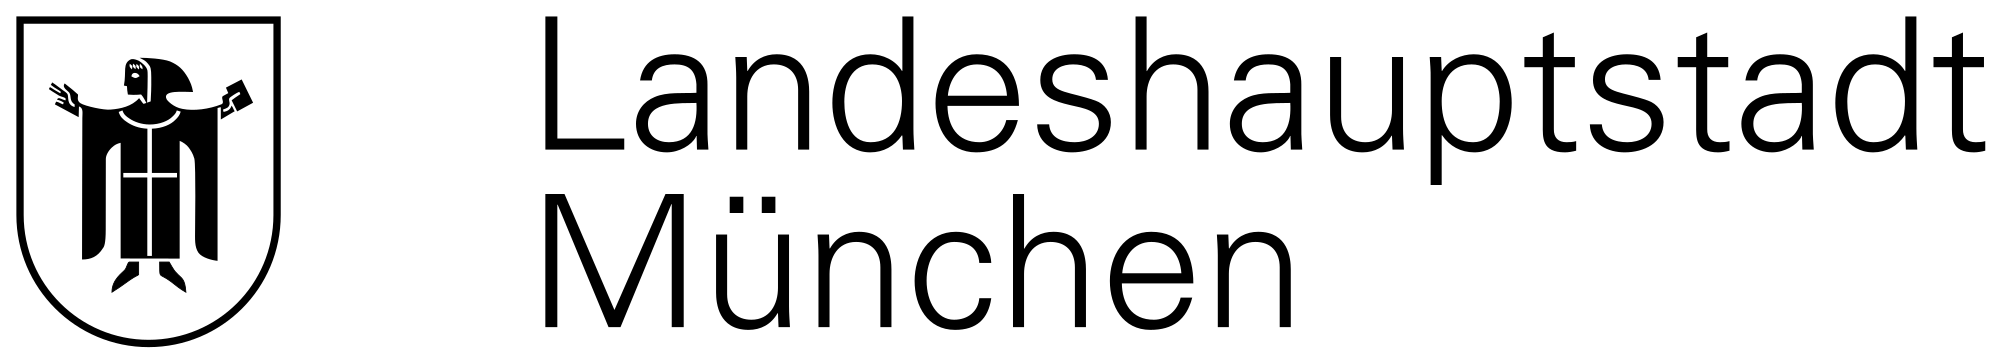 München_Logo.svg.png